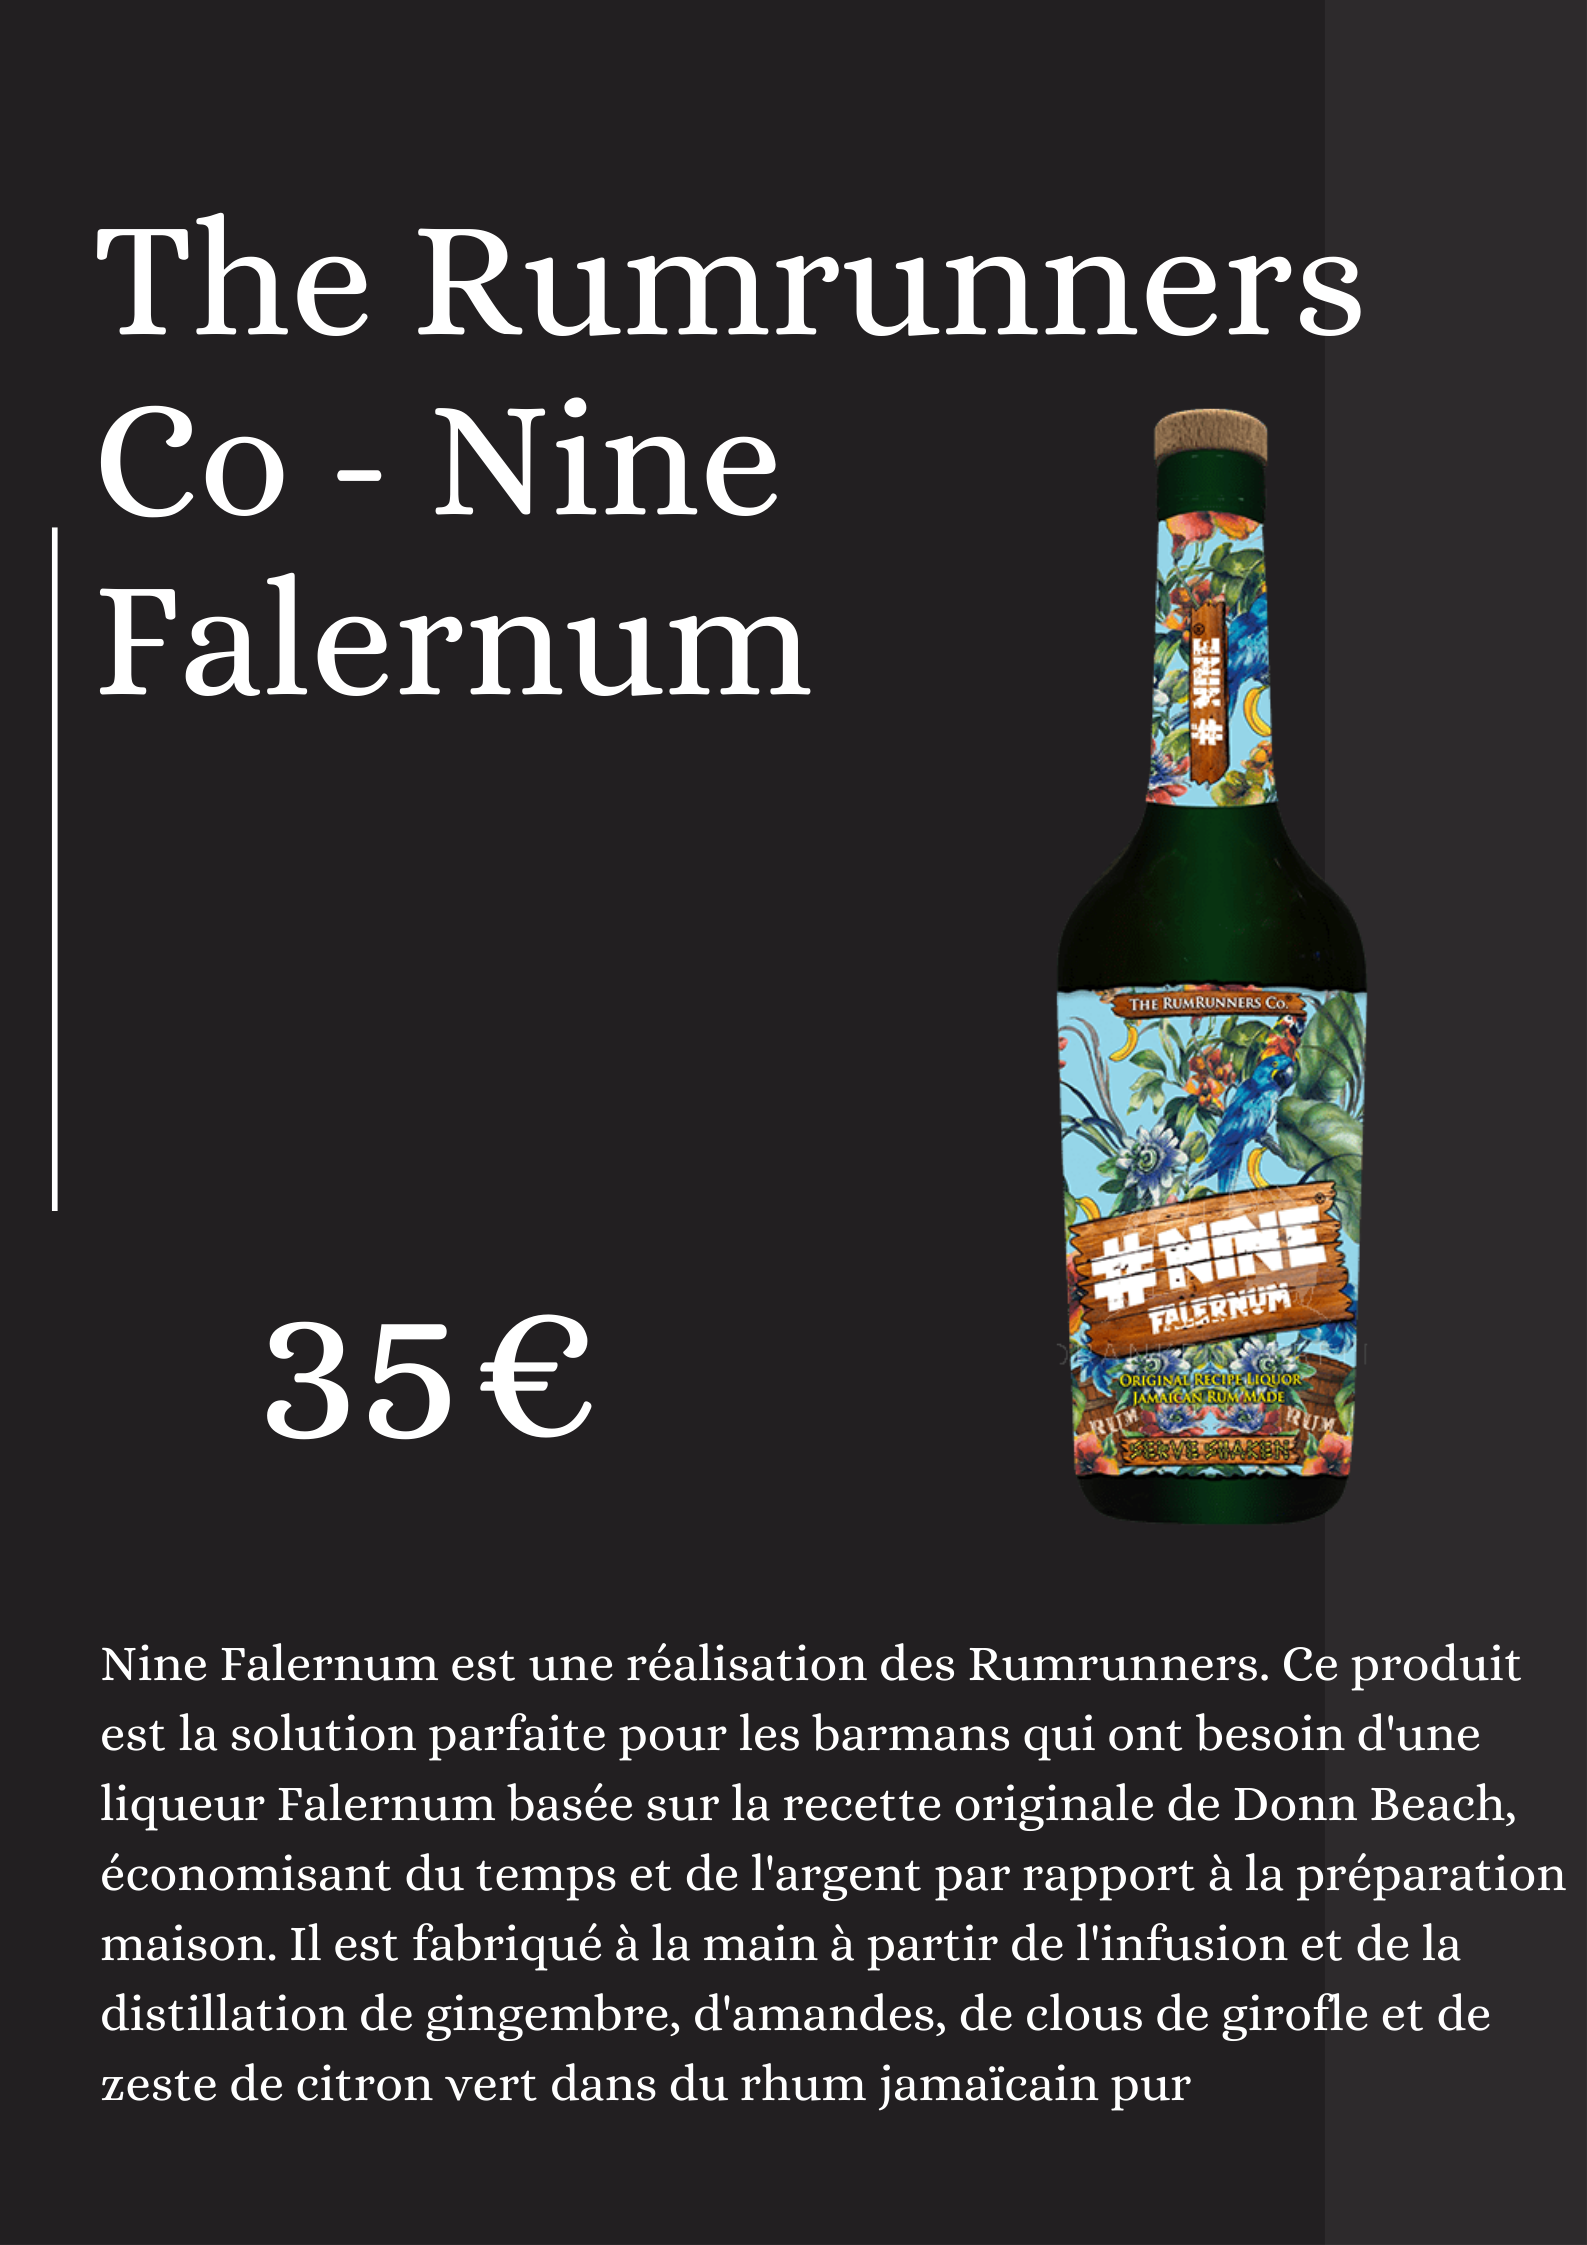 The Rumrunners Co – Nine Falernum